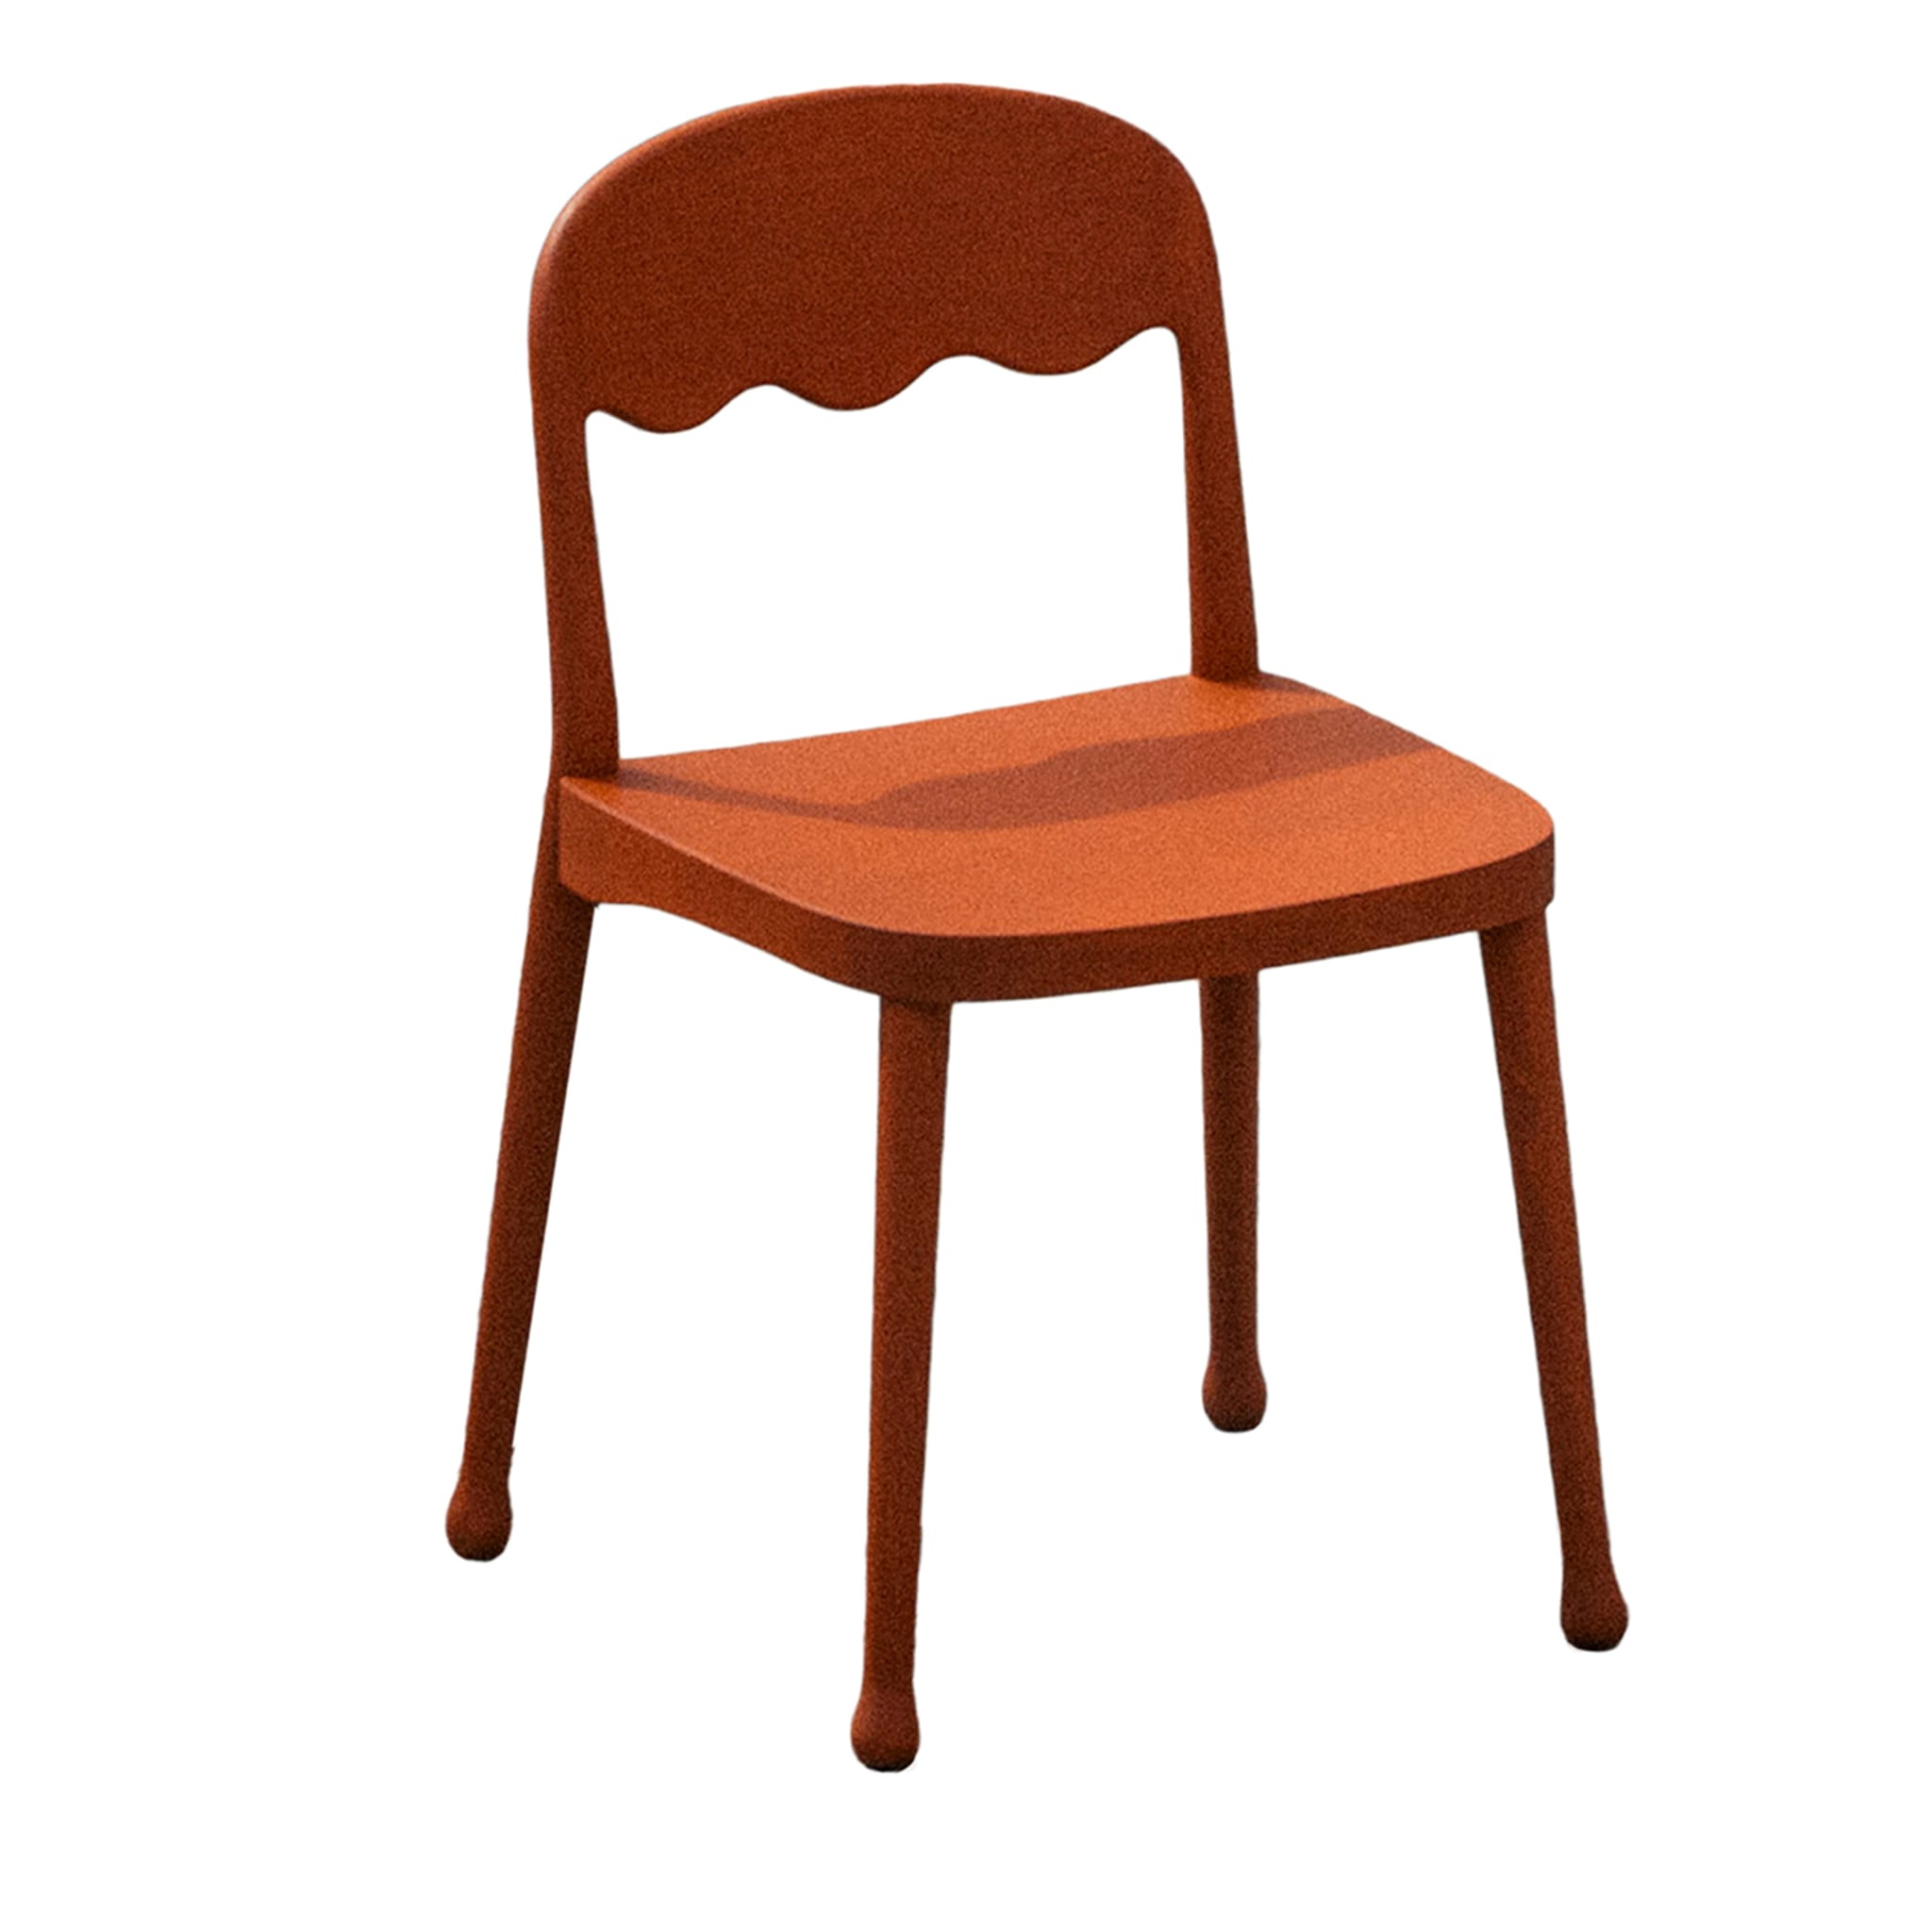 Frisée 250 Orange Chair by Cristina Celestino - Main view